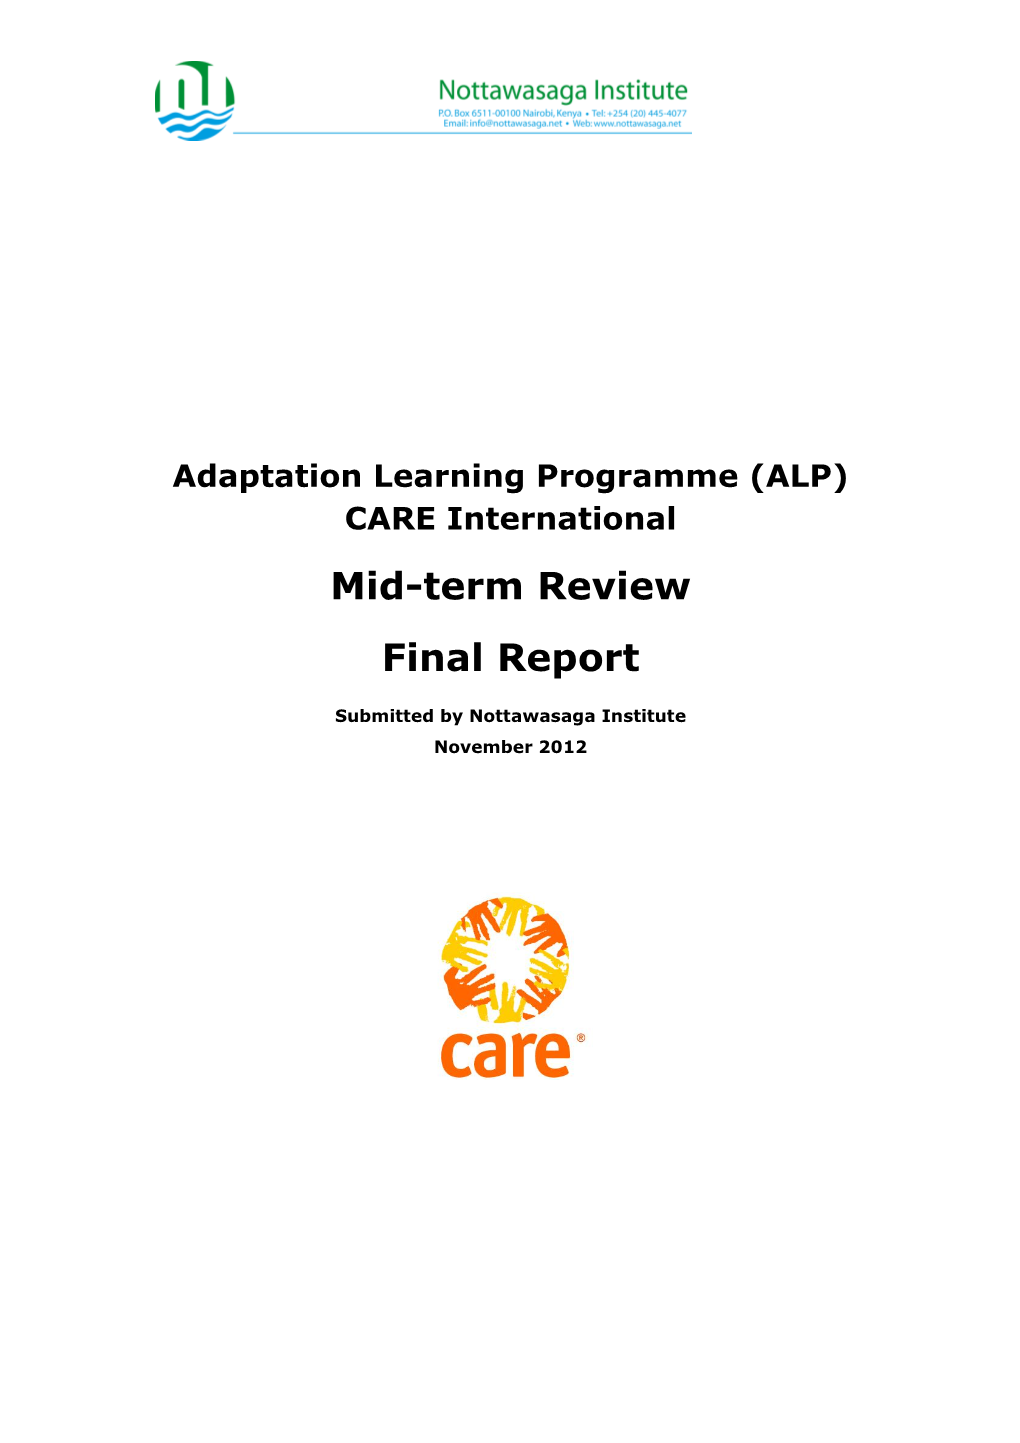 (ALP) CARE International Mid-Term Review Final Report